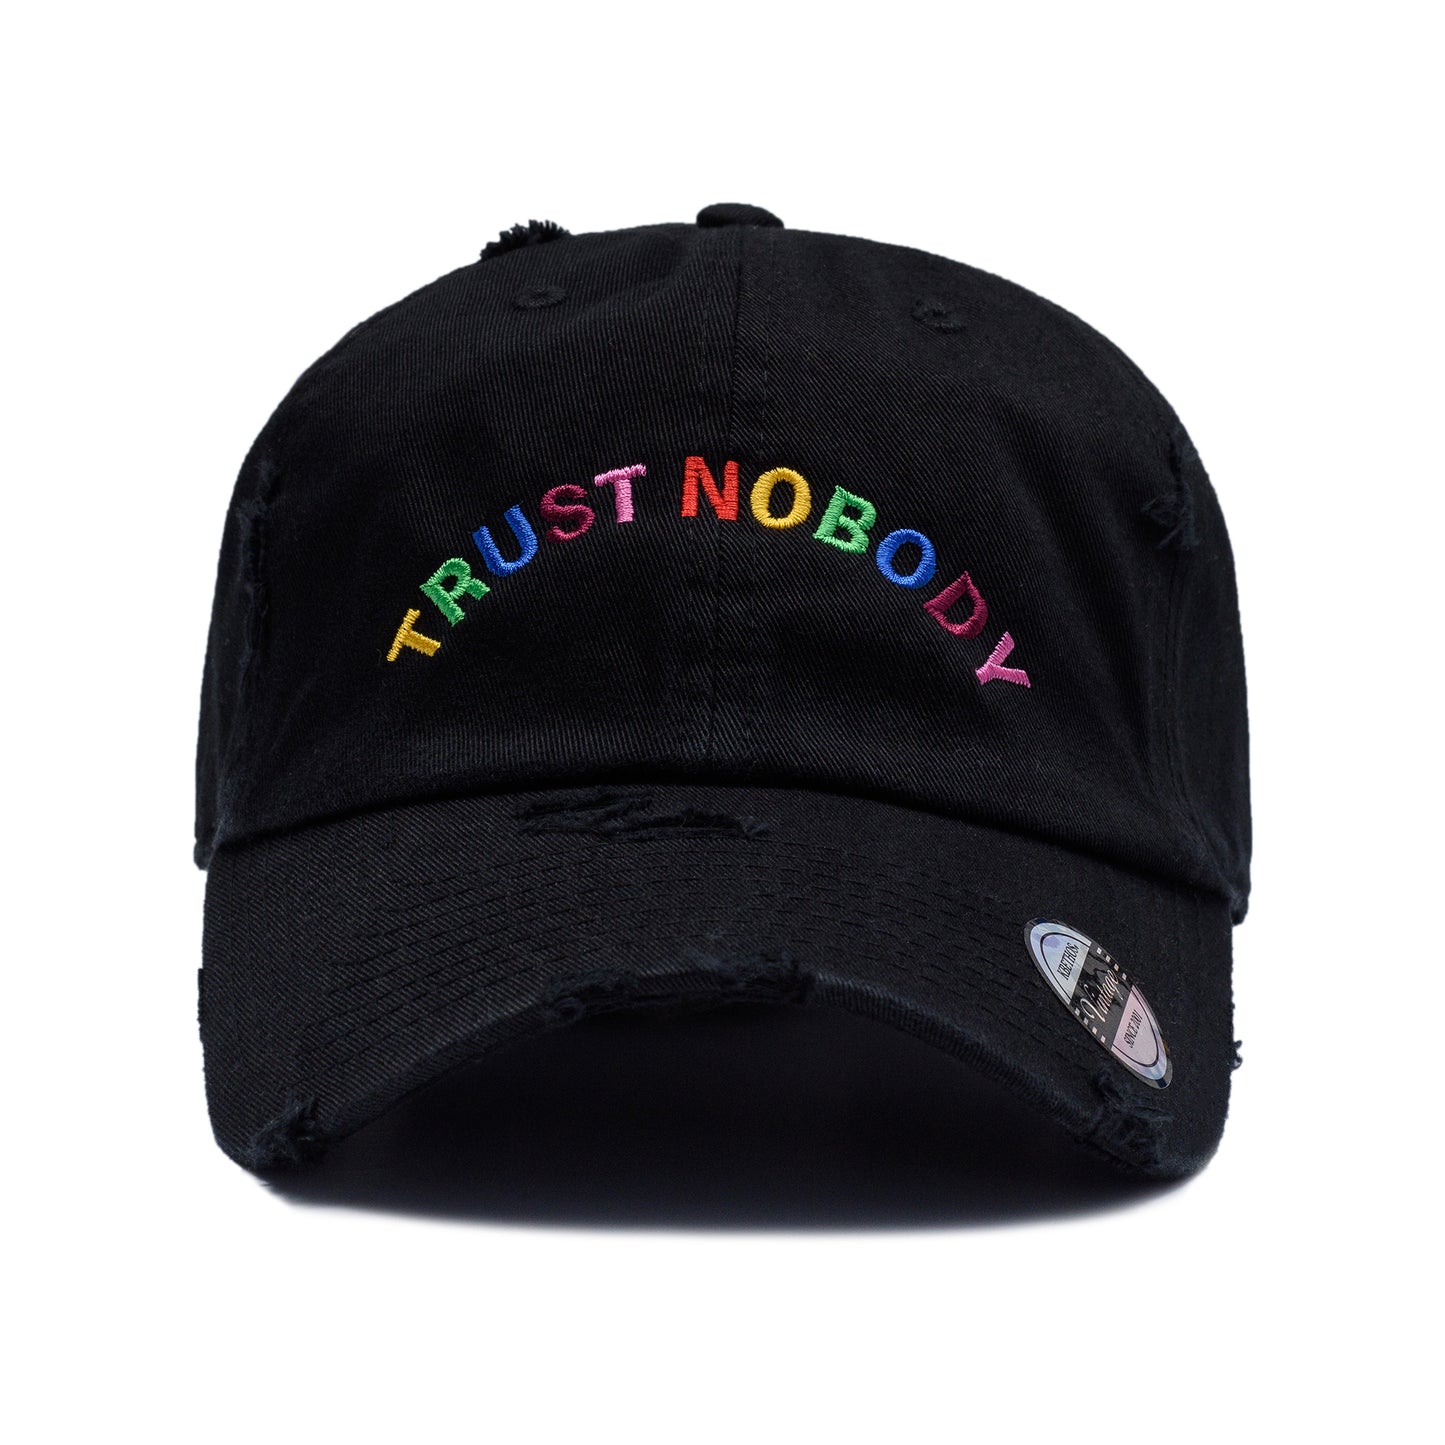 Trust Nobody Distressed Hat